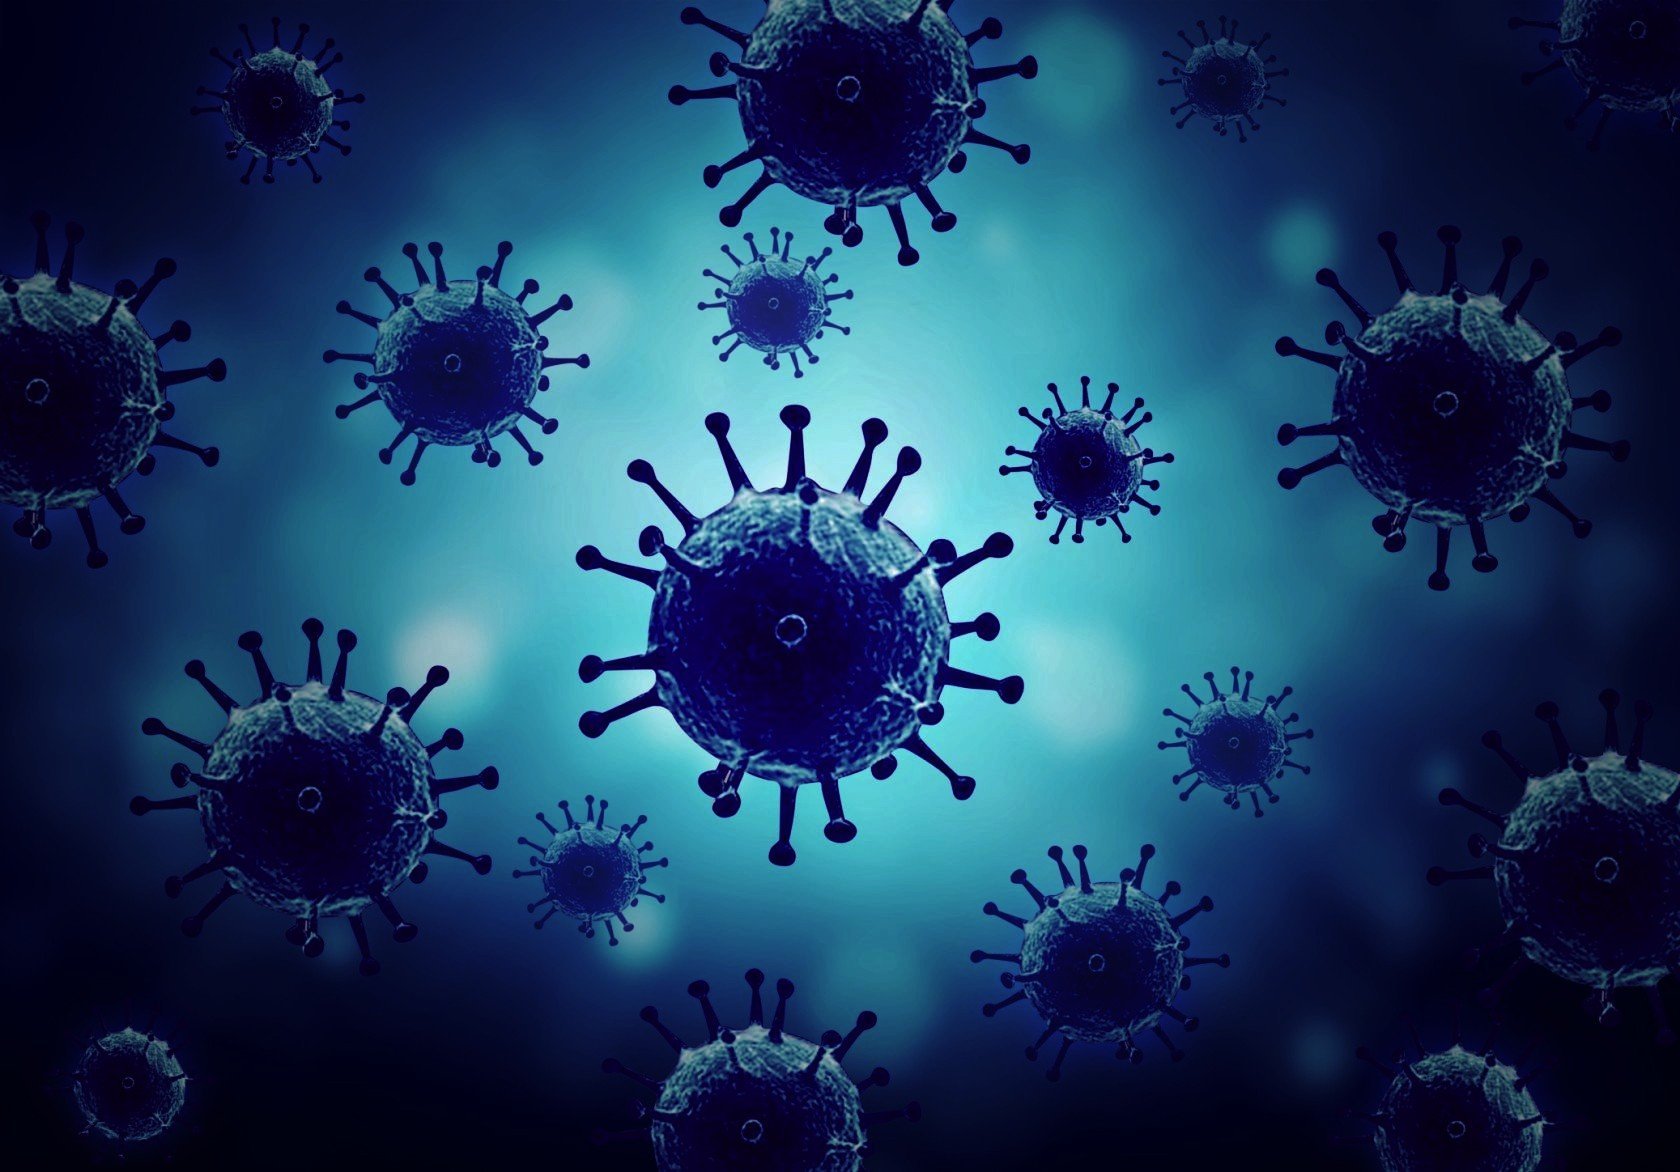 Картинки про вируса. Вирусы. Вирусы и бактерии. Вирусы фон. Вирусы картинки.